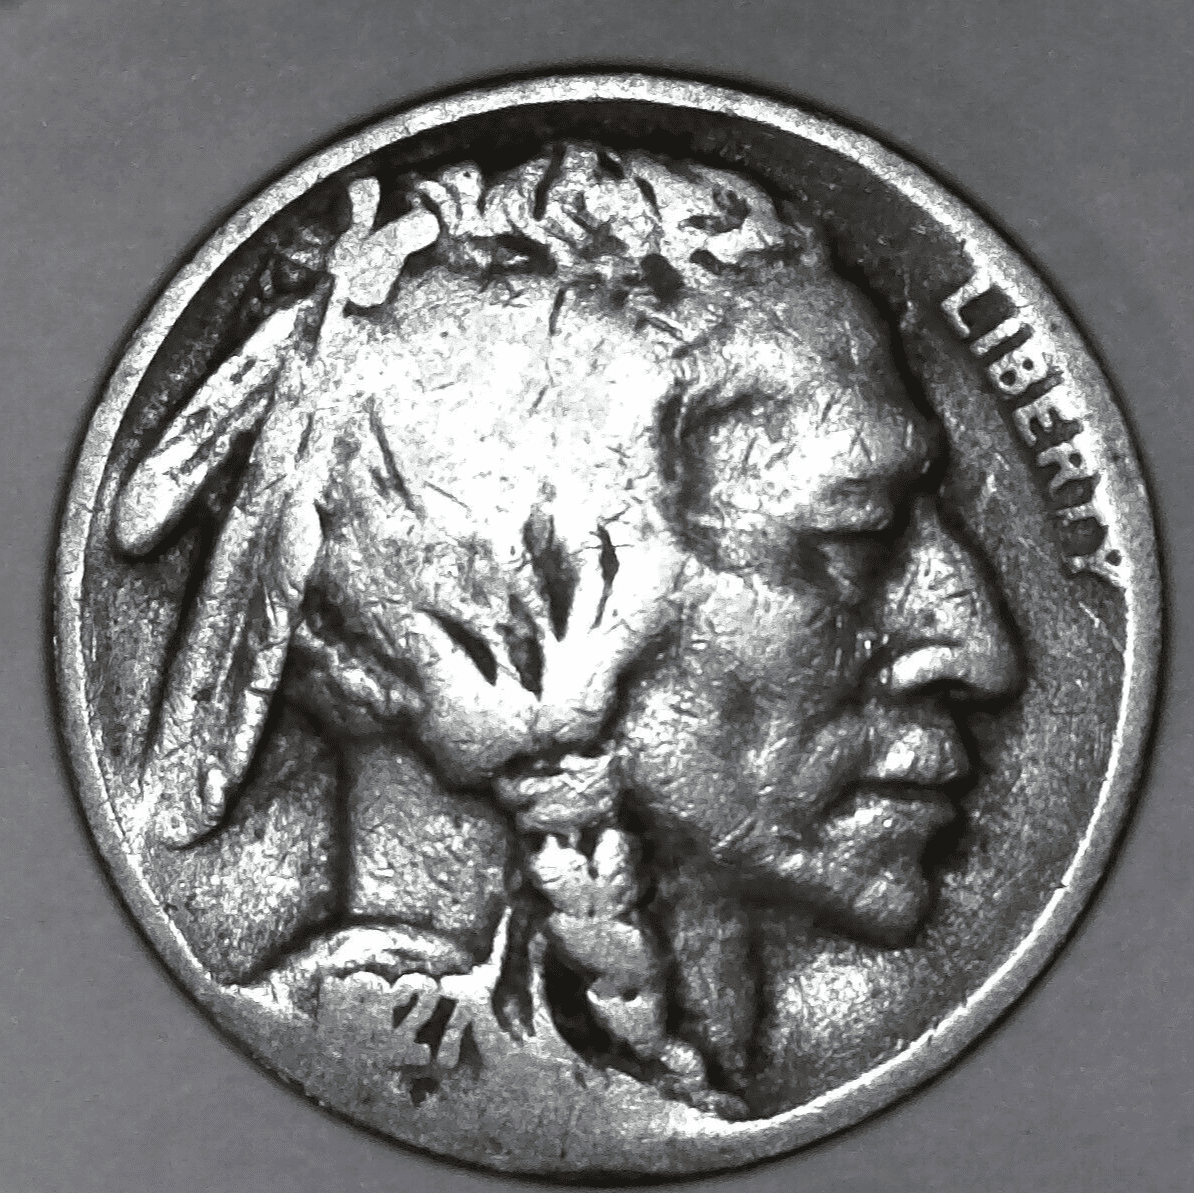 1927 S Buffalo Nickel Two-Feathered Headdress Error